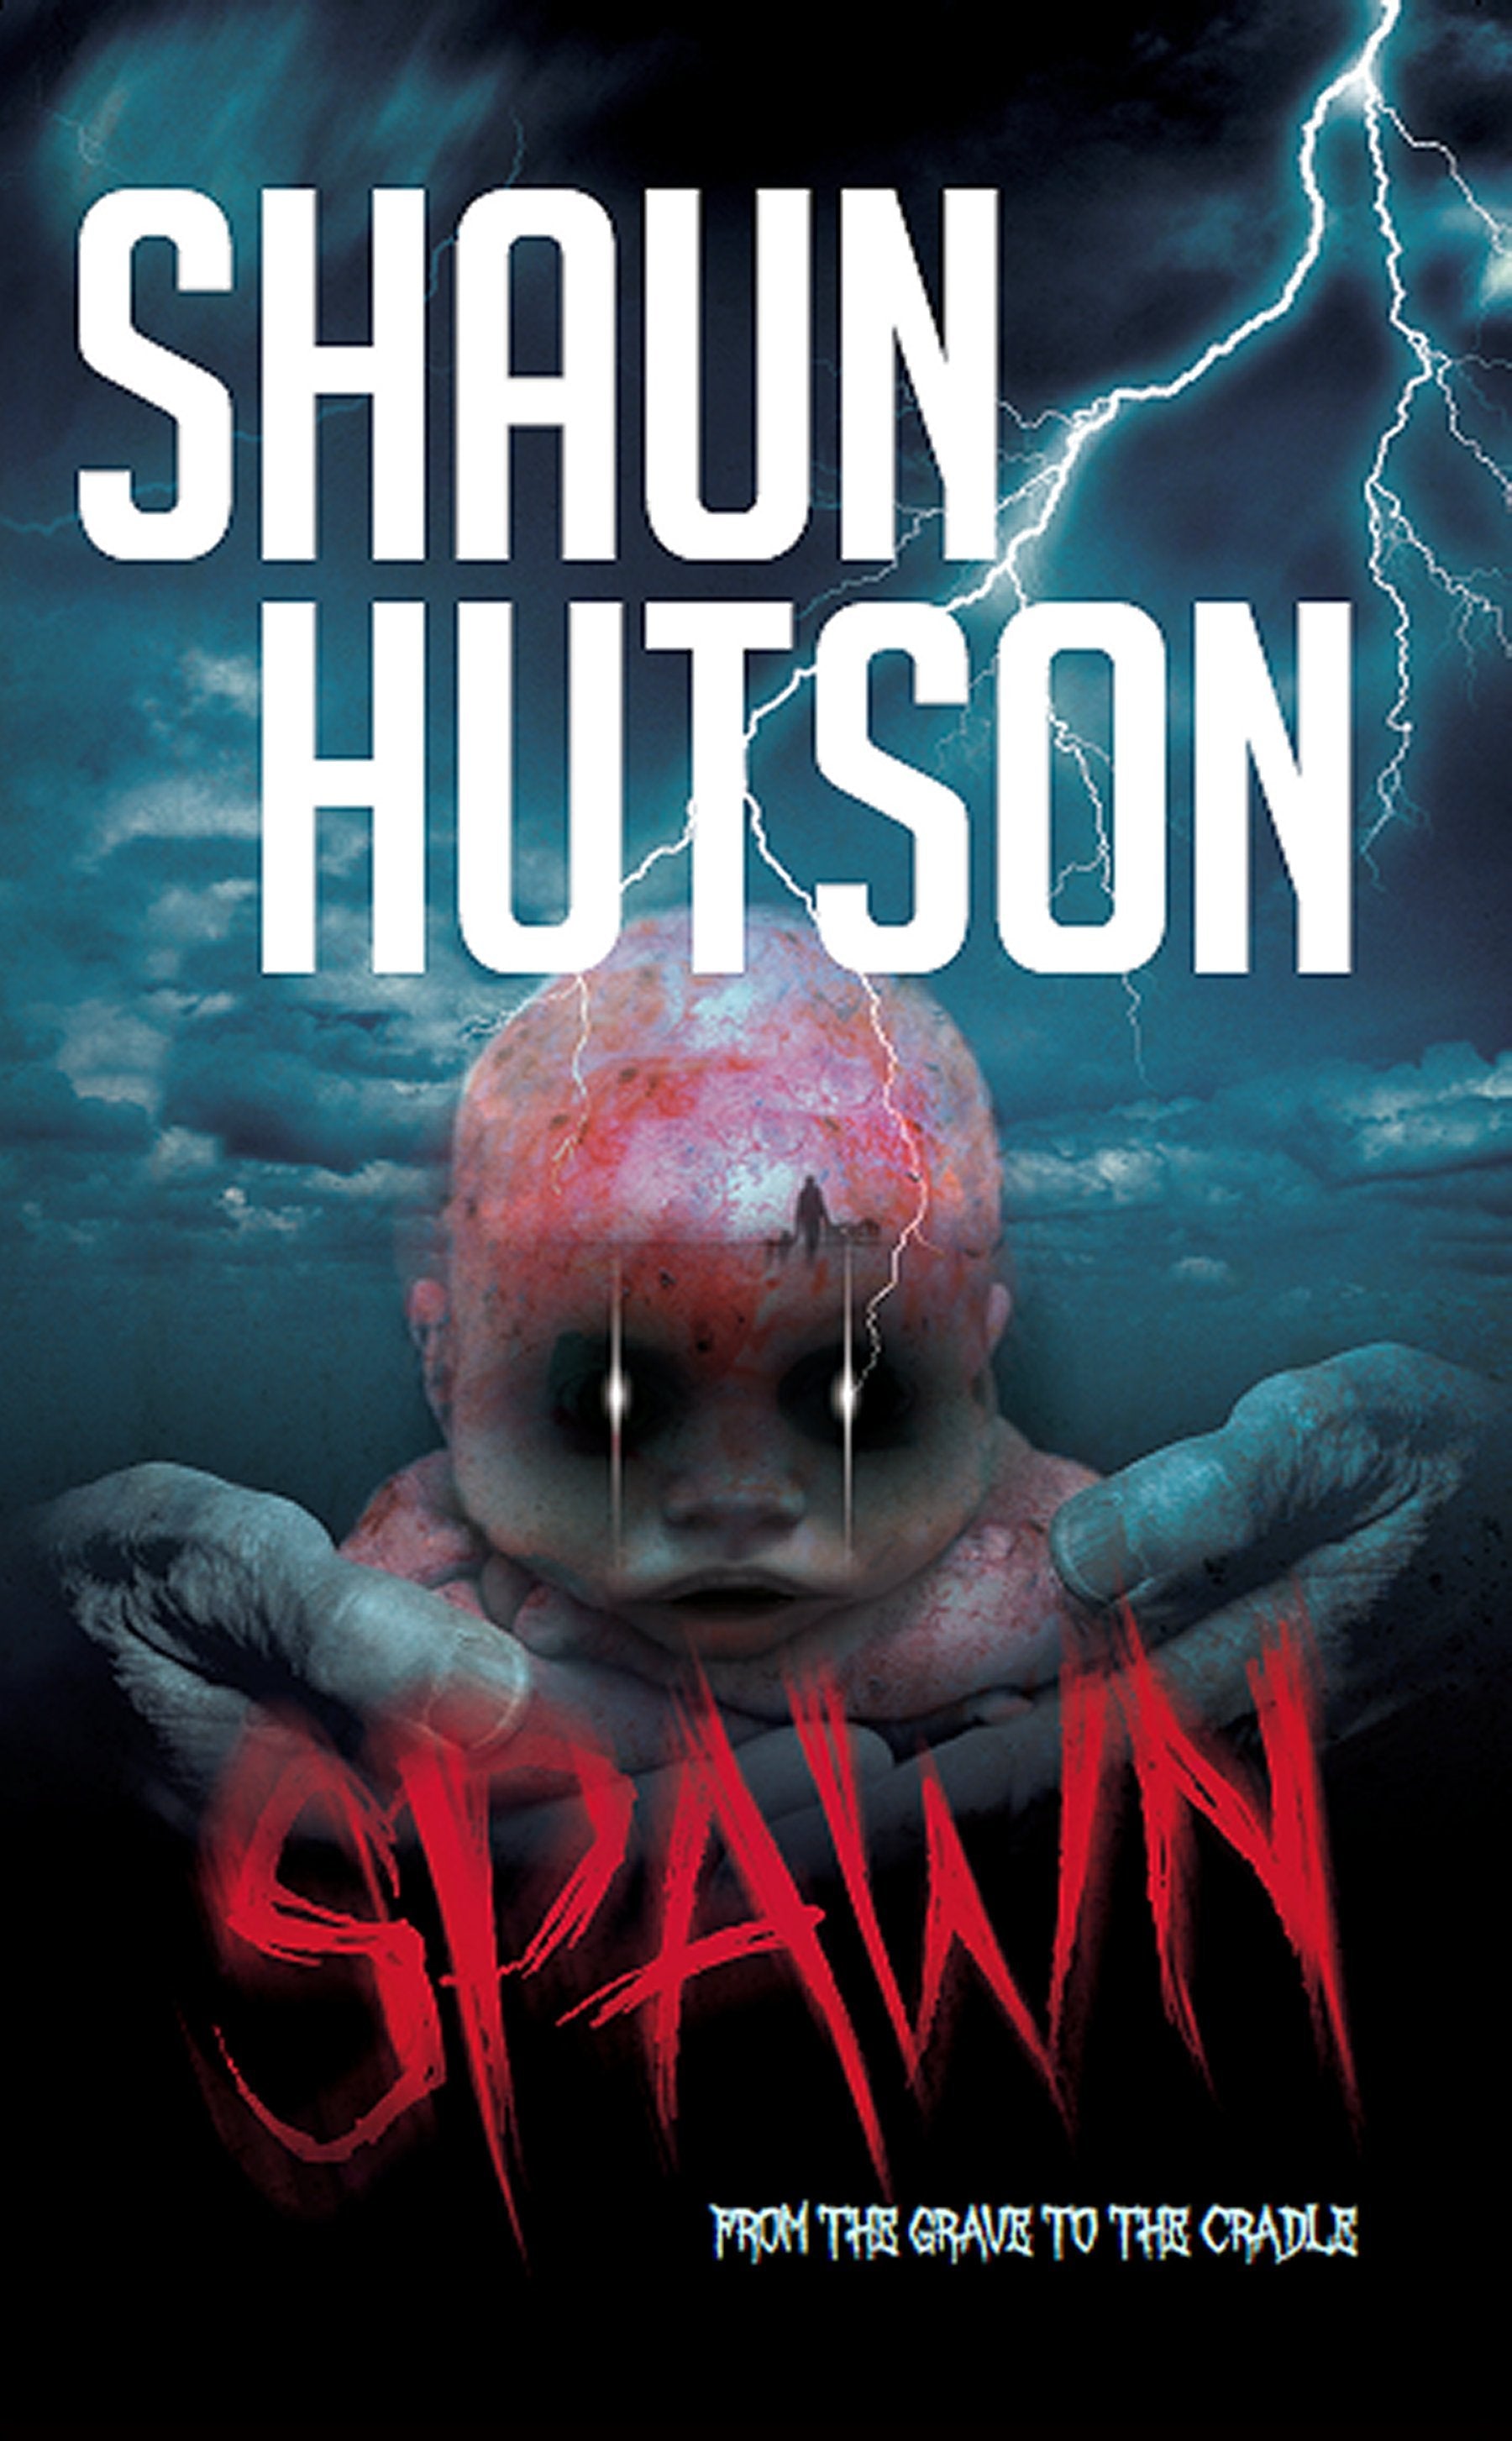 Spawn by Horror Novelist, Shaun Hutson